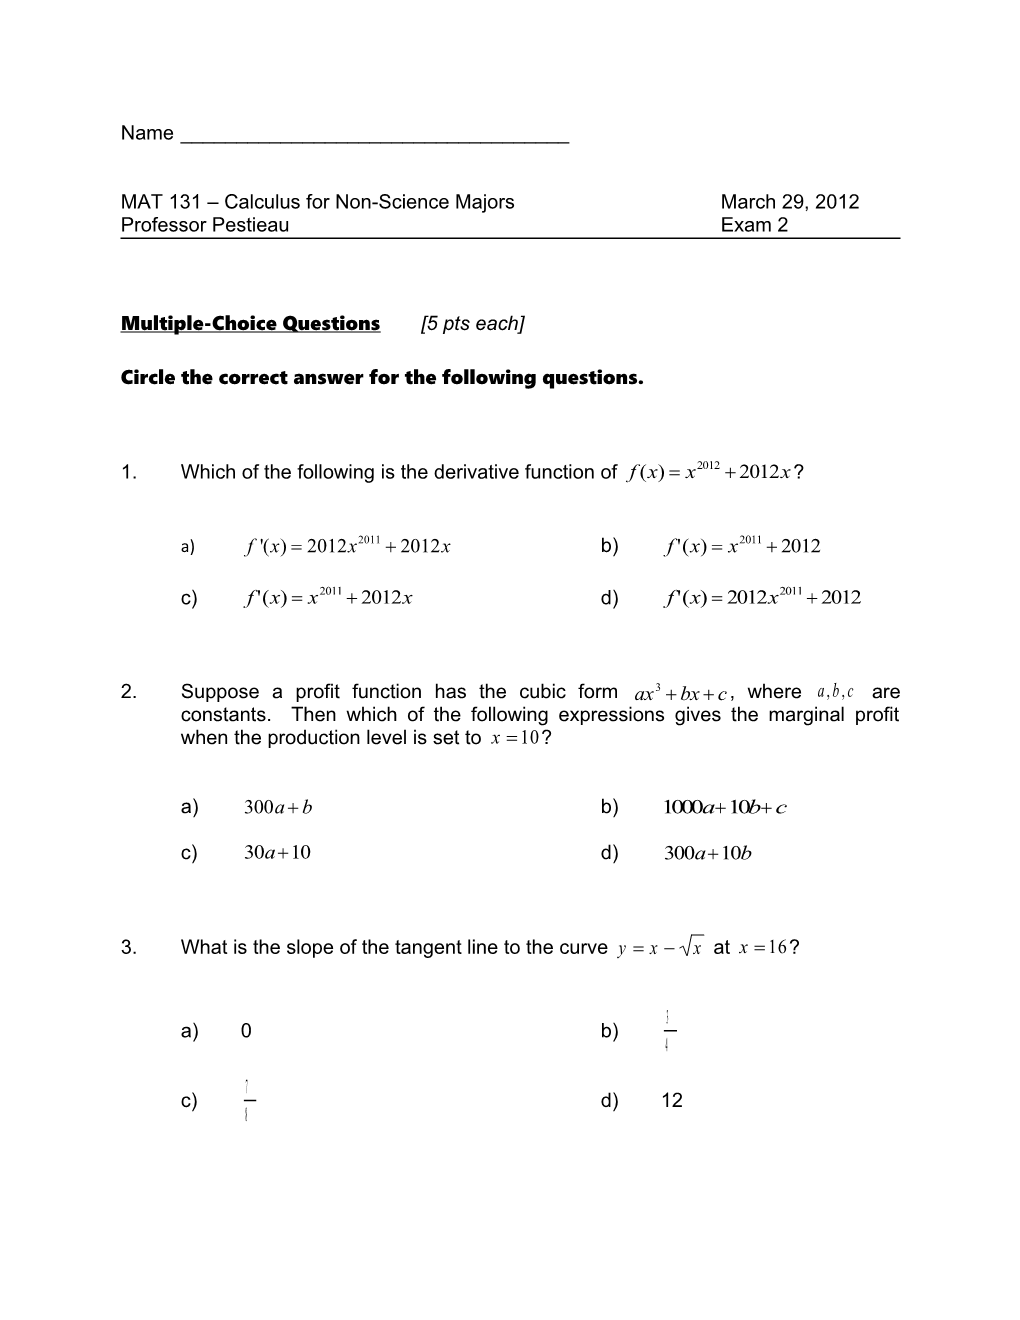 MAT 131 Calculus for Non-Science Majorsmarch 29, 2012